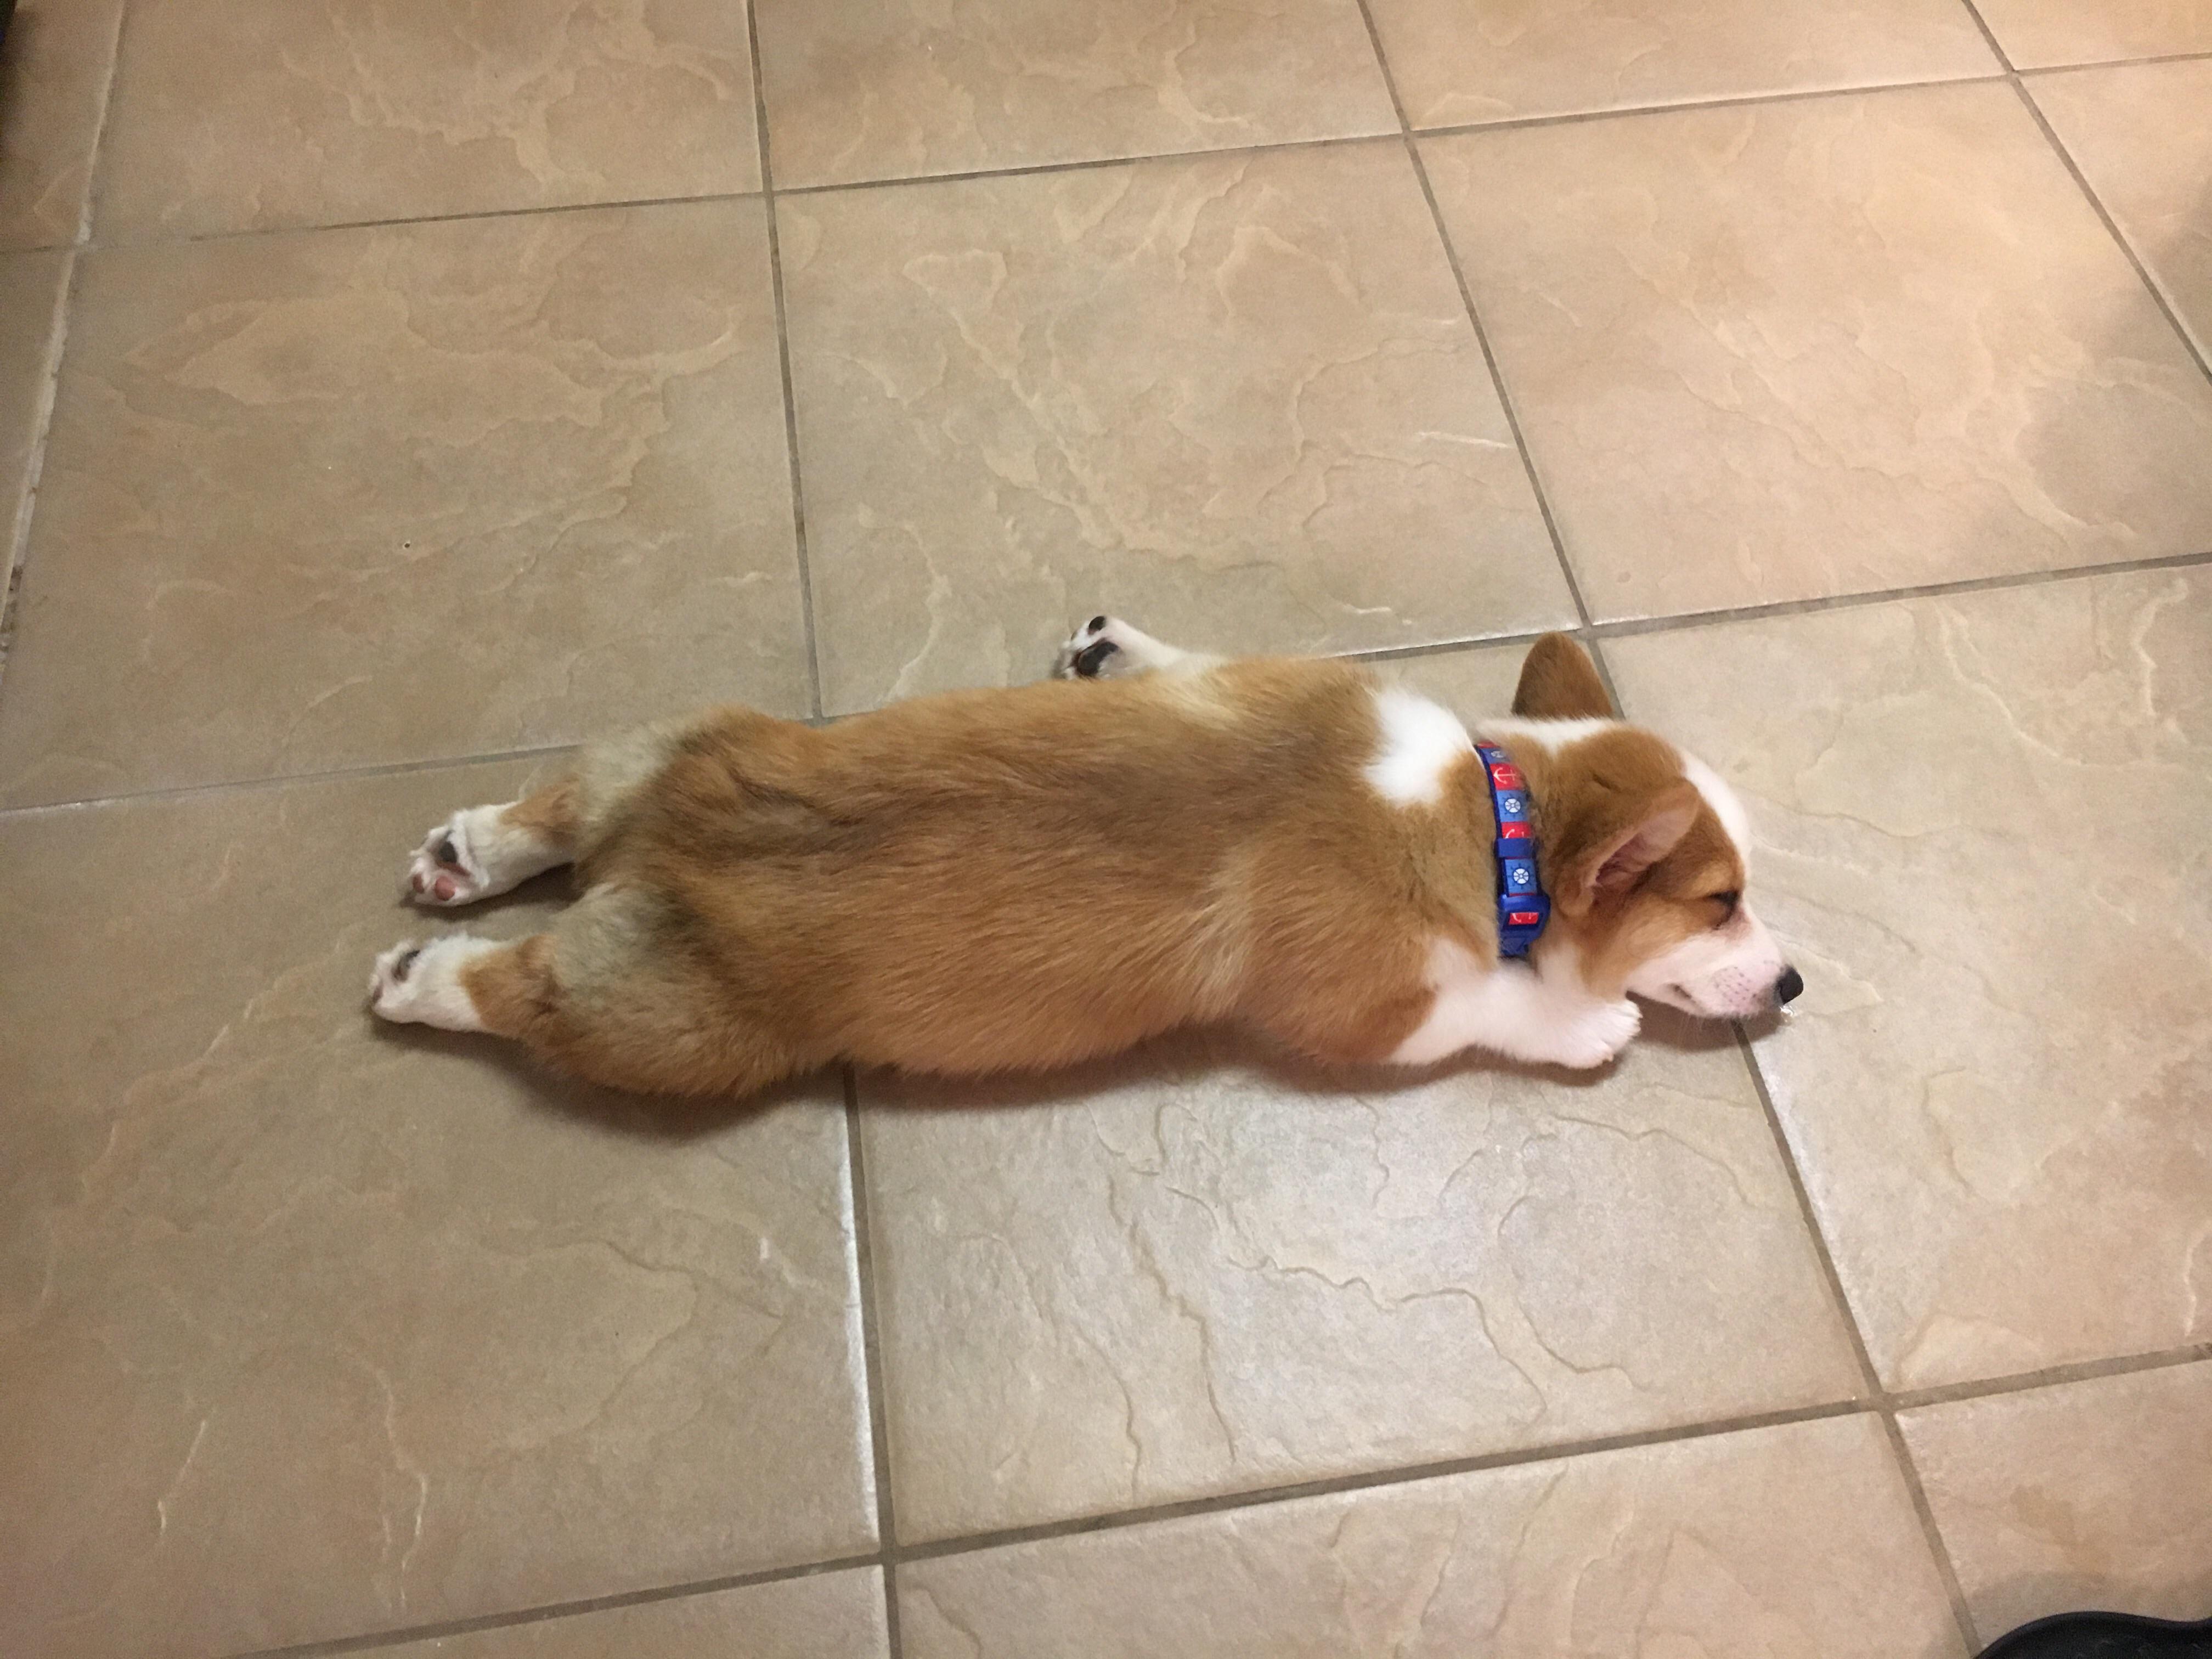 Corgi lying flat on the floor sleeping